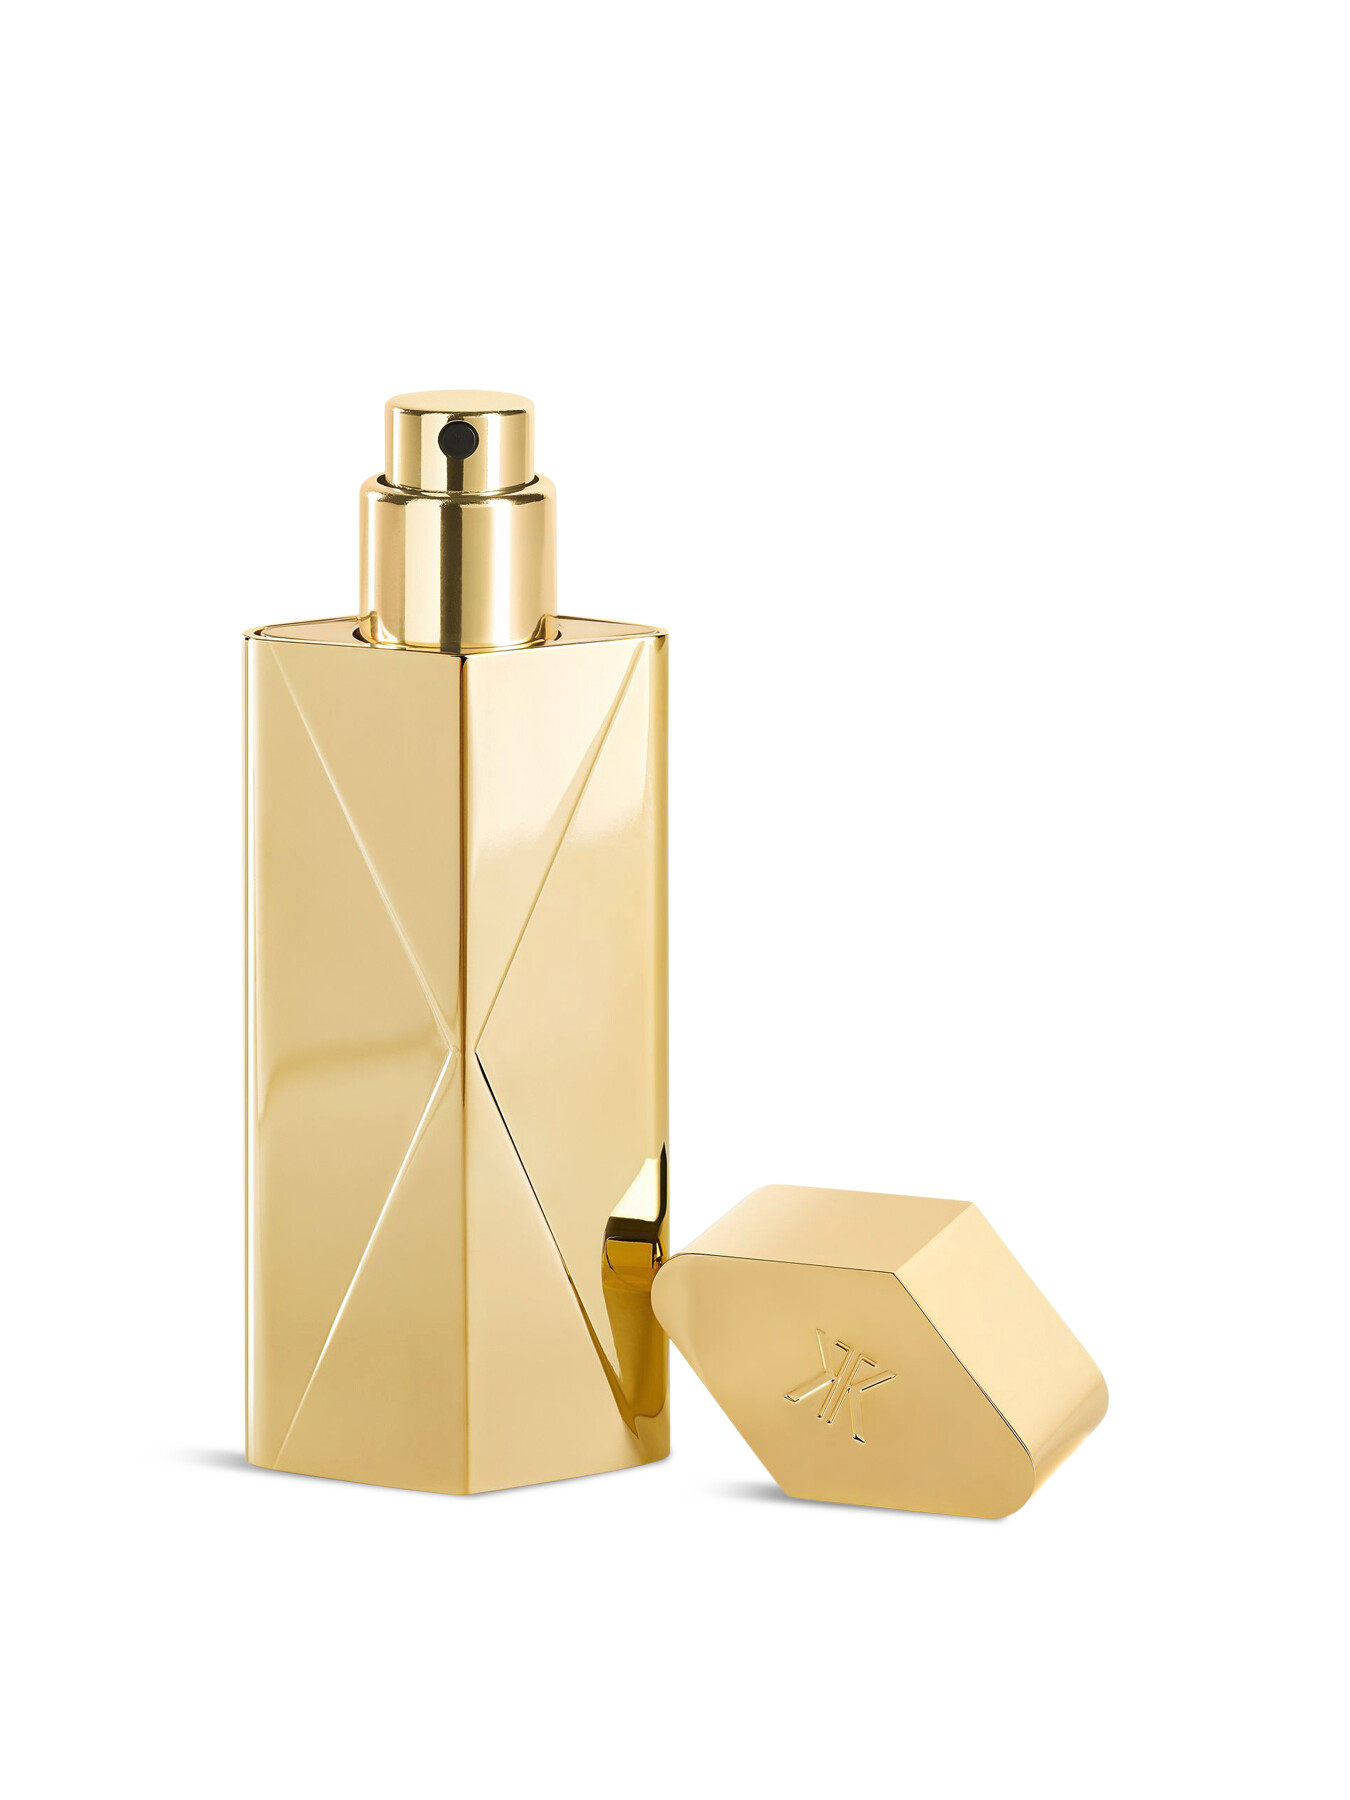 Maison Francis Kurkdjian Globe Trotter Gold Edition Travel Spray Case 11ml In White